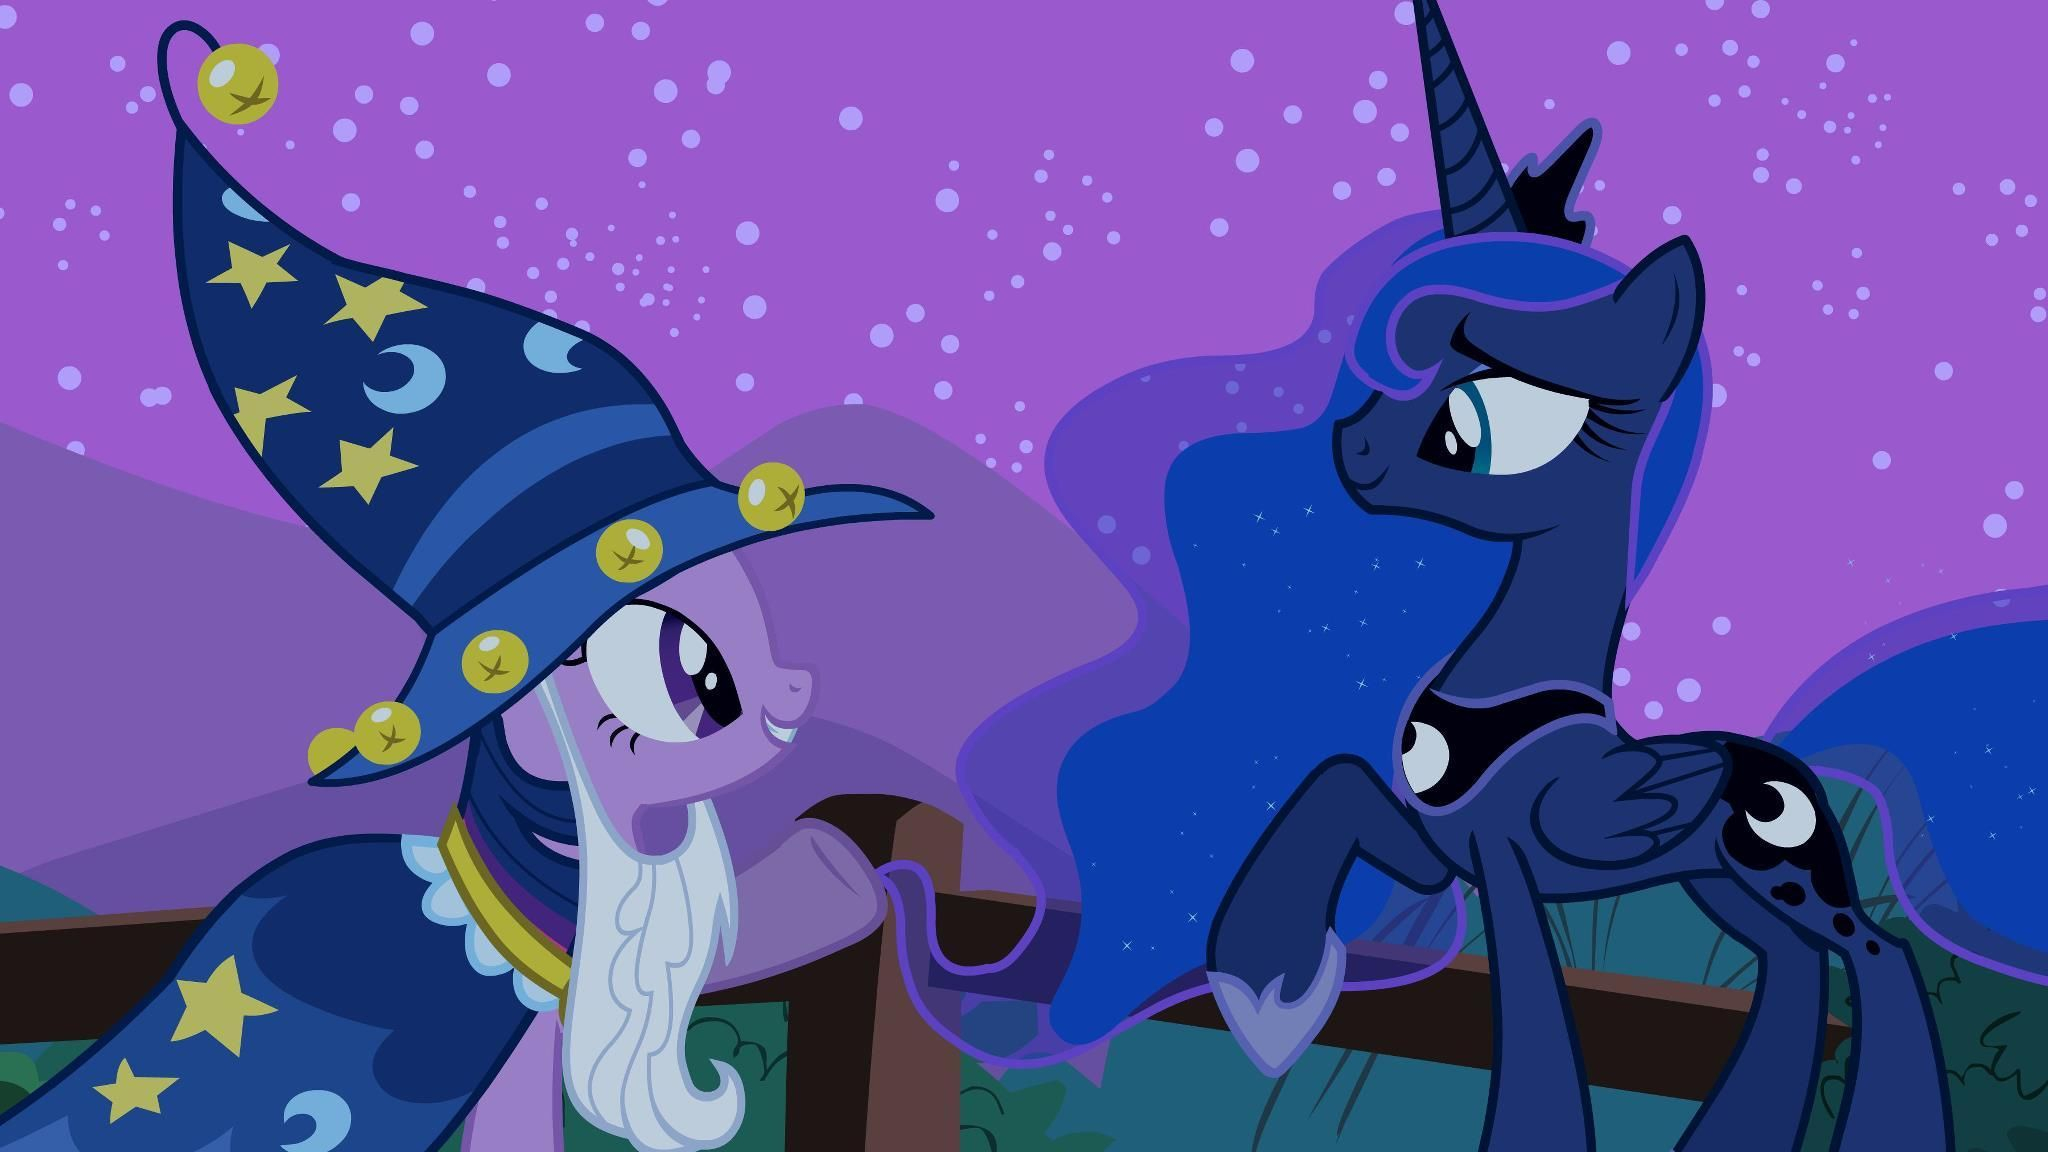 2048x1152 My Little Pony Friendship is Magic Image: Twilight Sparkle and Princess Luna | My little pony songs, My little pony friendship, My little pony princess